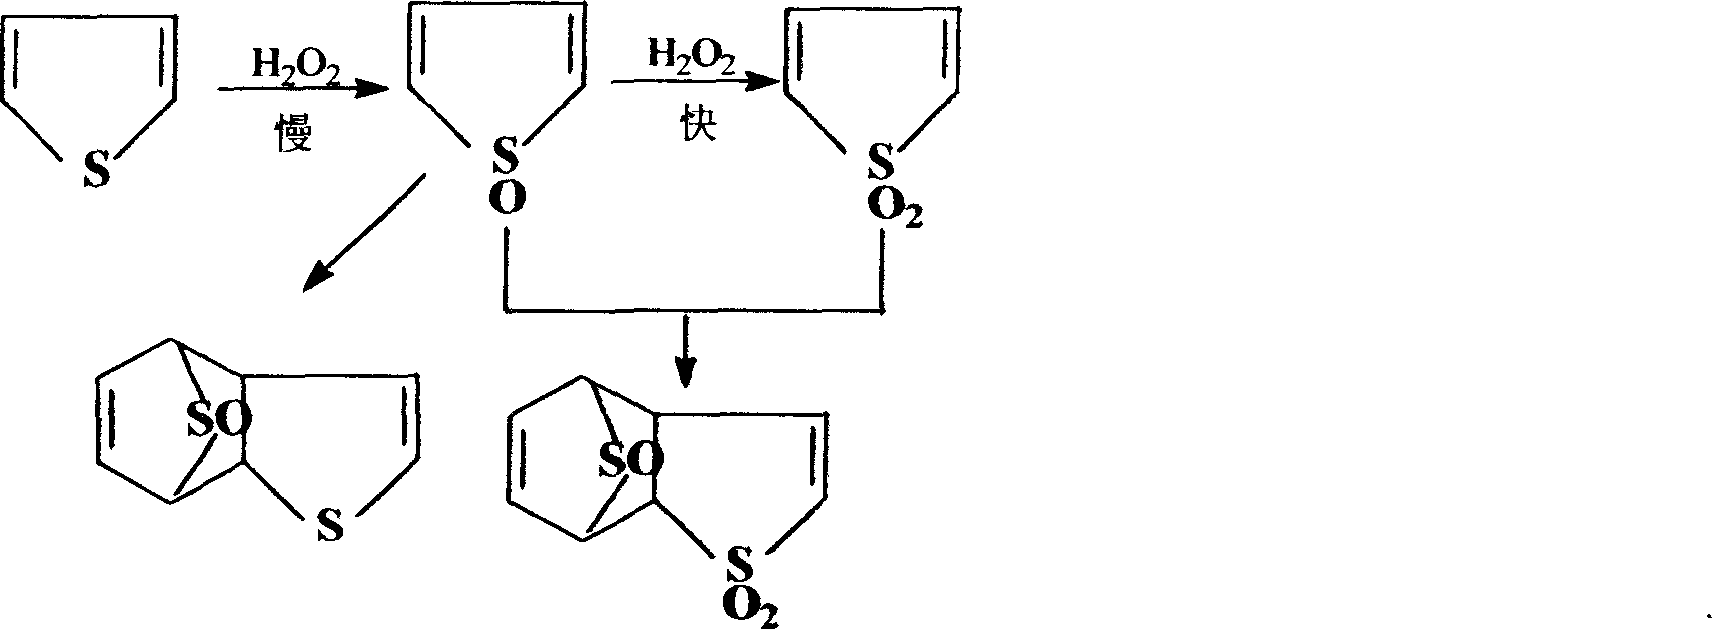 Light-end products oxidation desulfurizing and deodorizing method